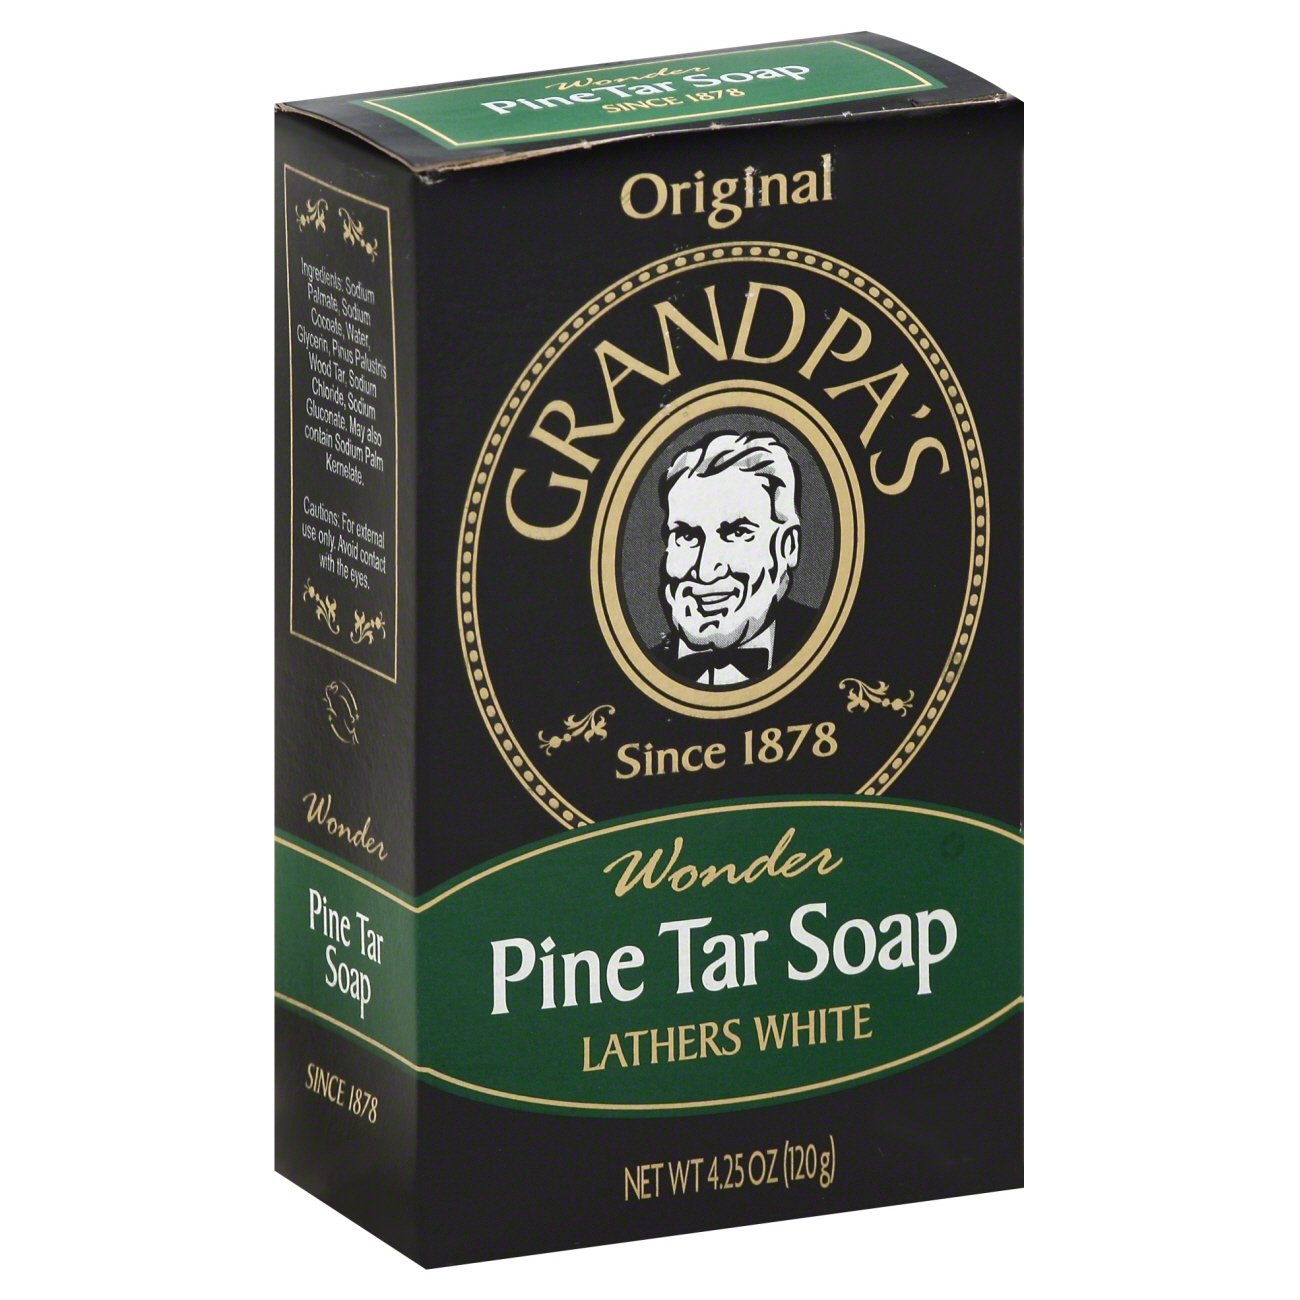 Grandpa's Pine Tar Soap